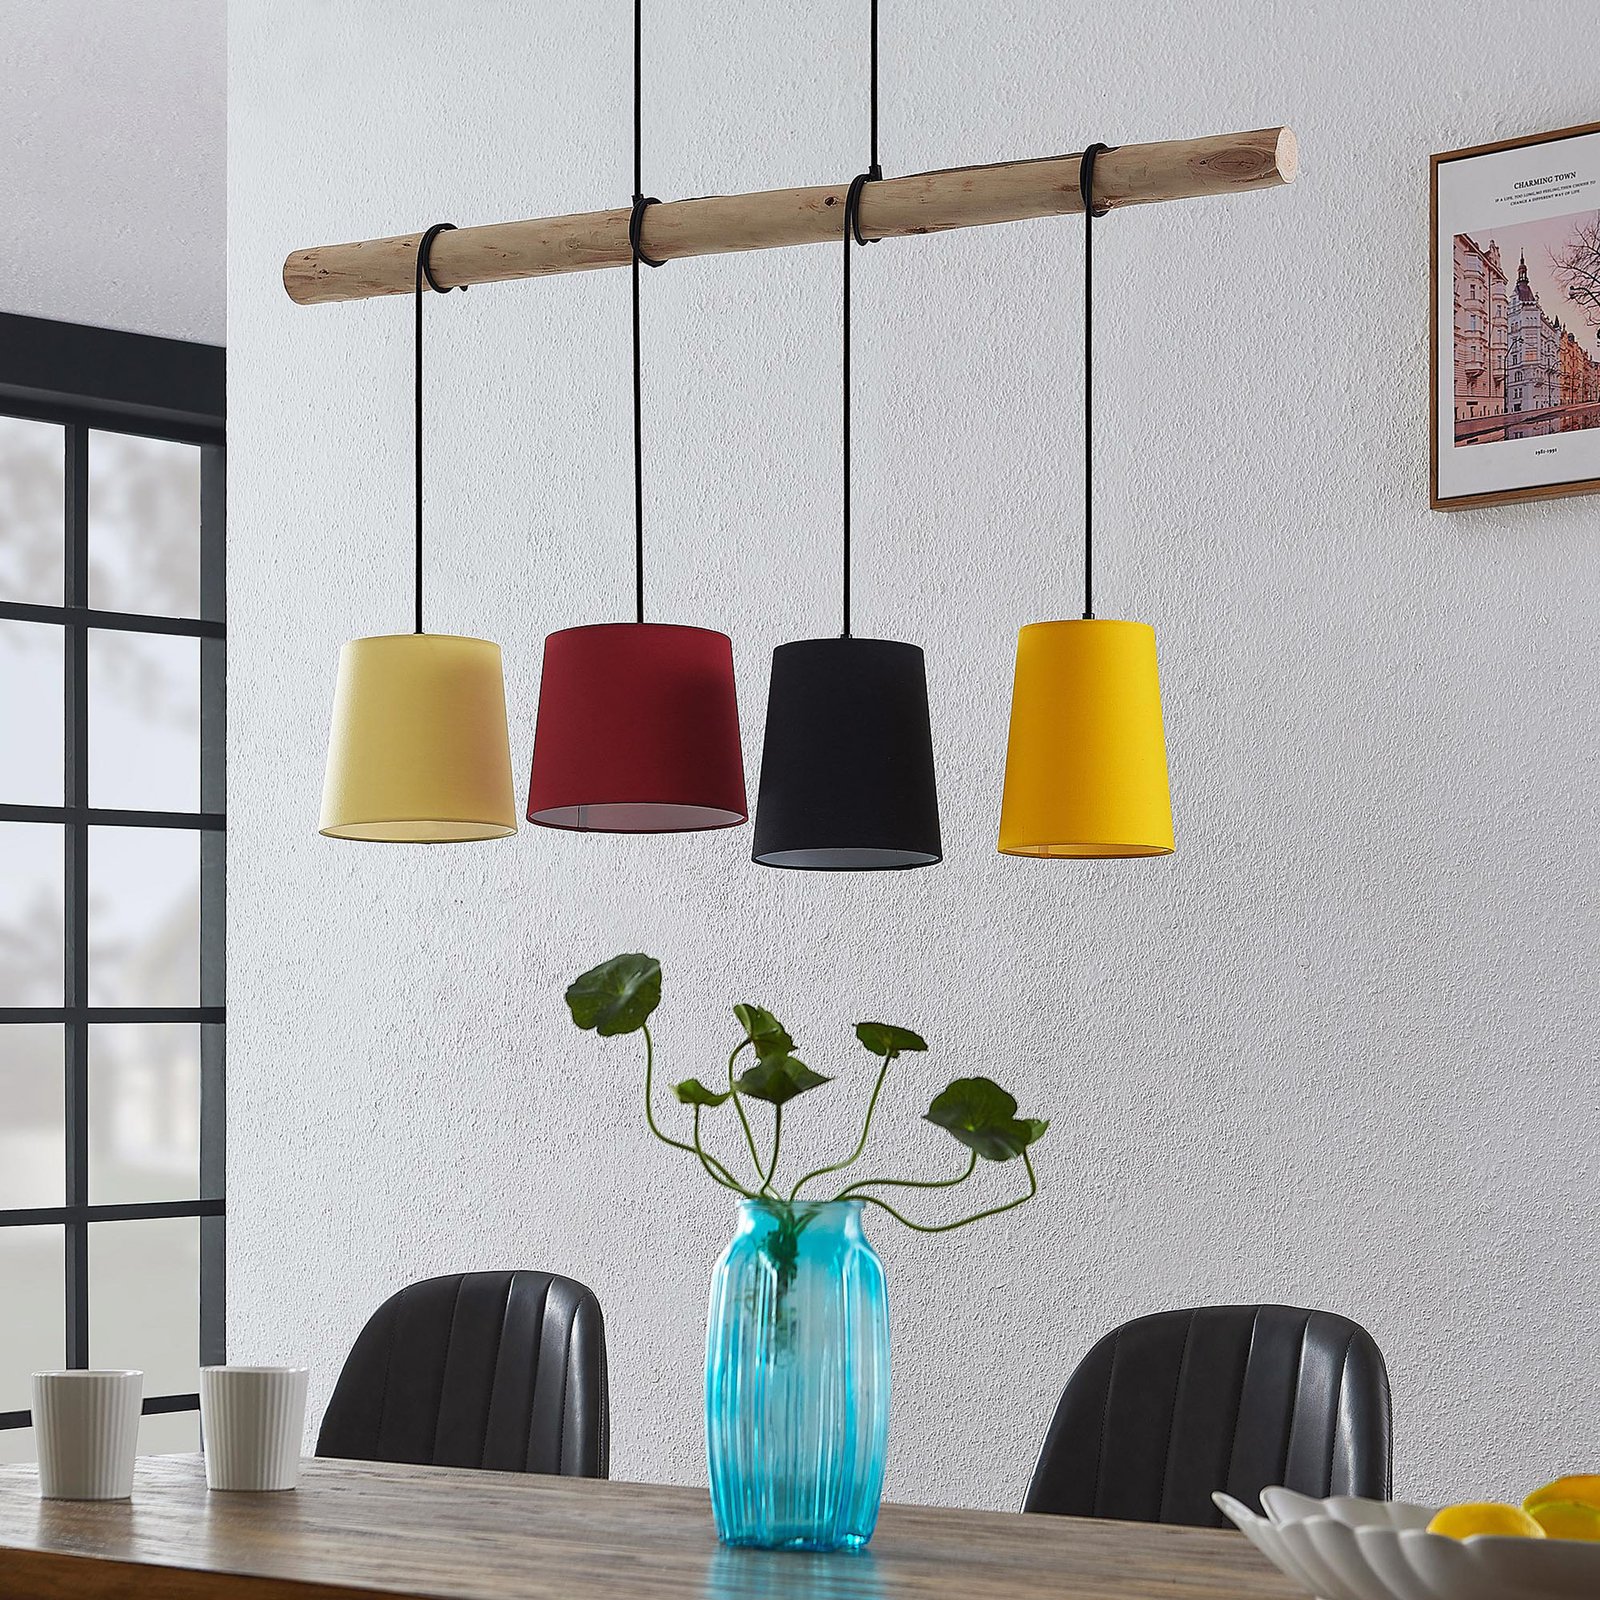 Lindby Hinai hanglamp, zwart, rood, geel